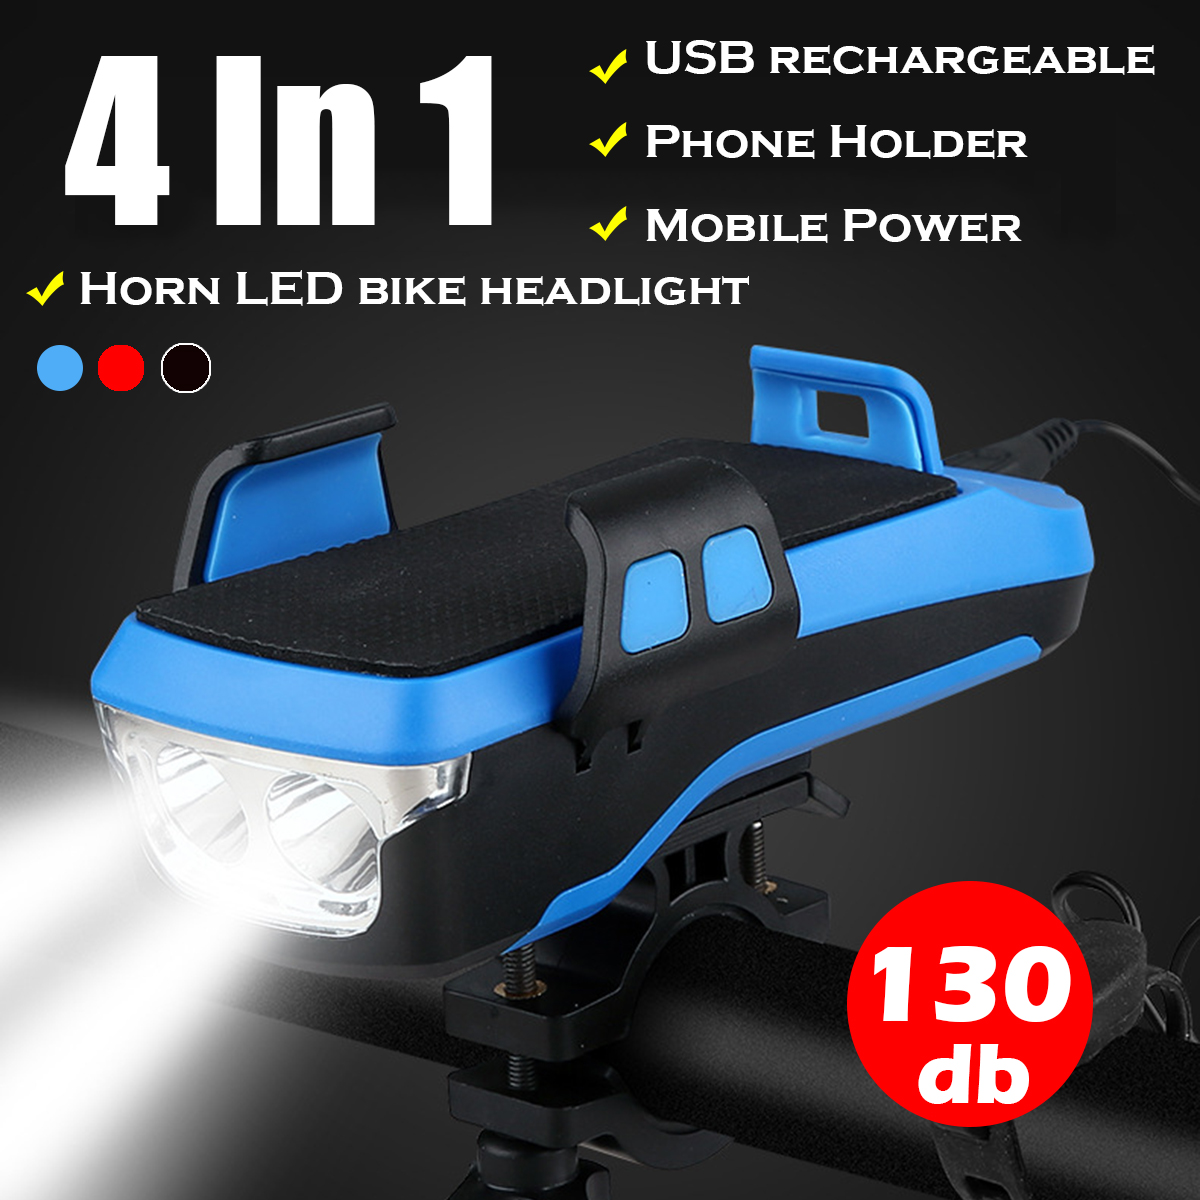 Bike-Motorbike-LED-Lamp-Light-Power-Bank-Phone-Holder-for-Smart-Phone-for-iPhone-Huawei-1633298-1